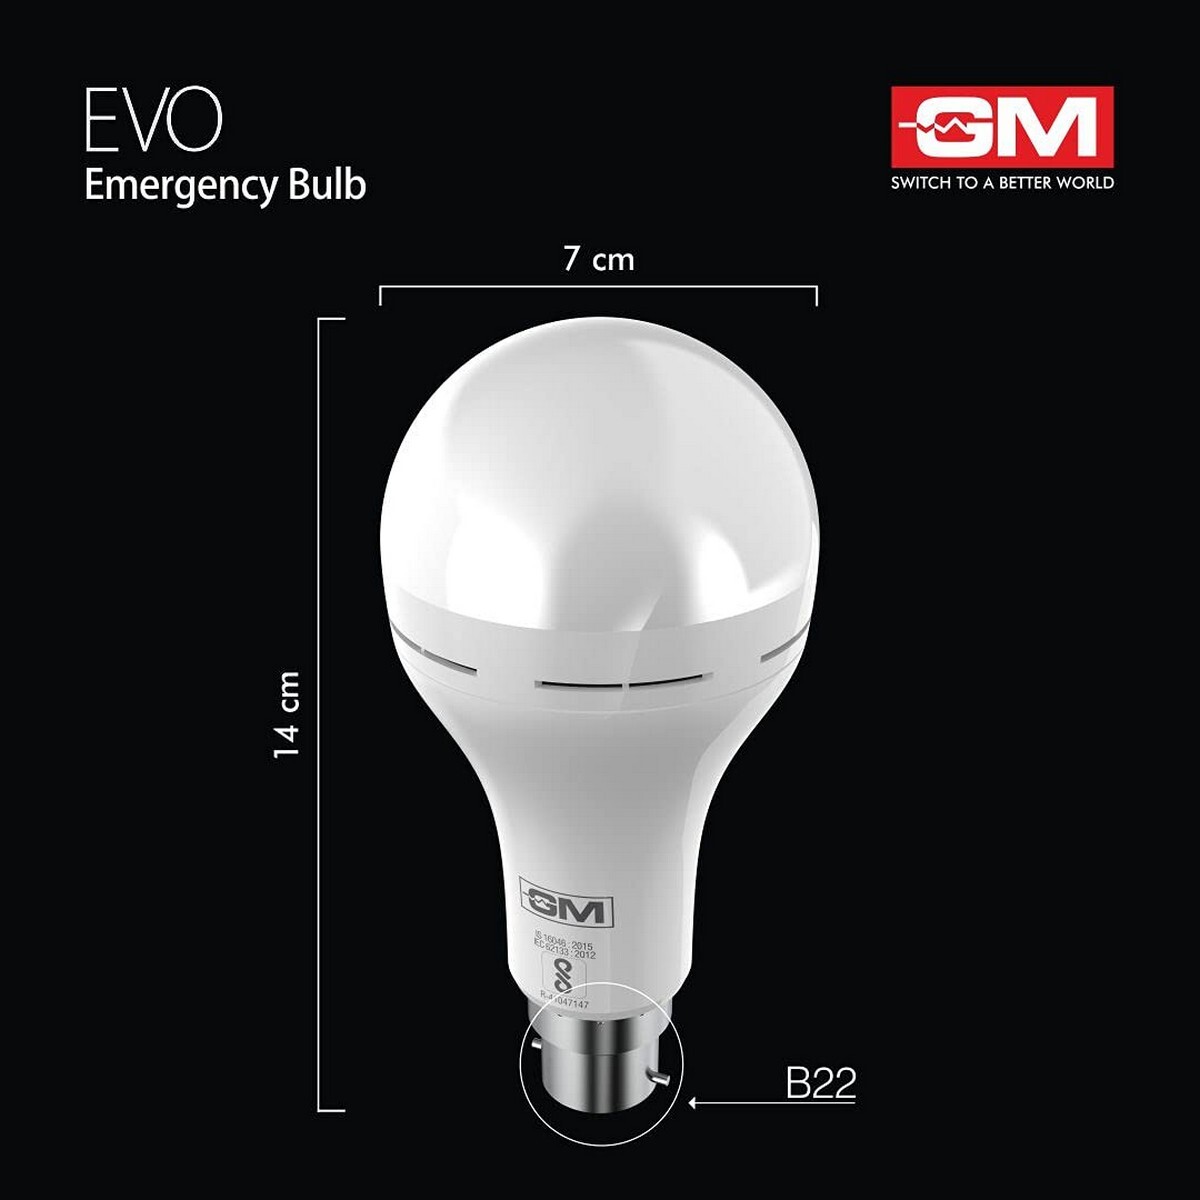 GM Evo 9Watt Emergency Bulb